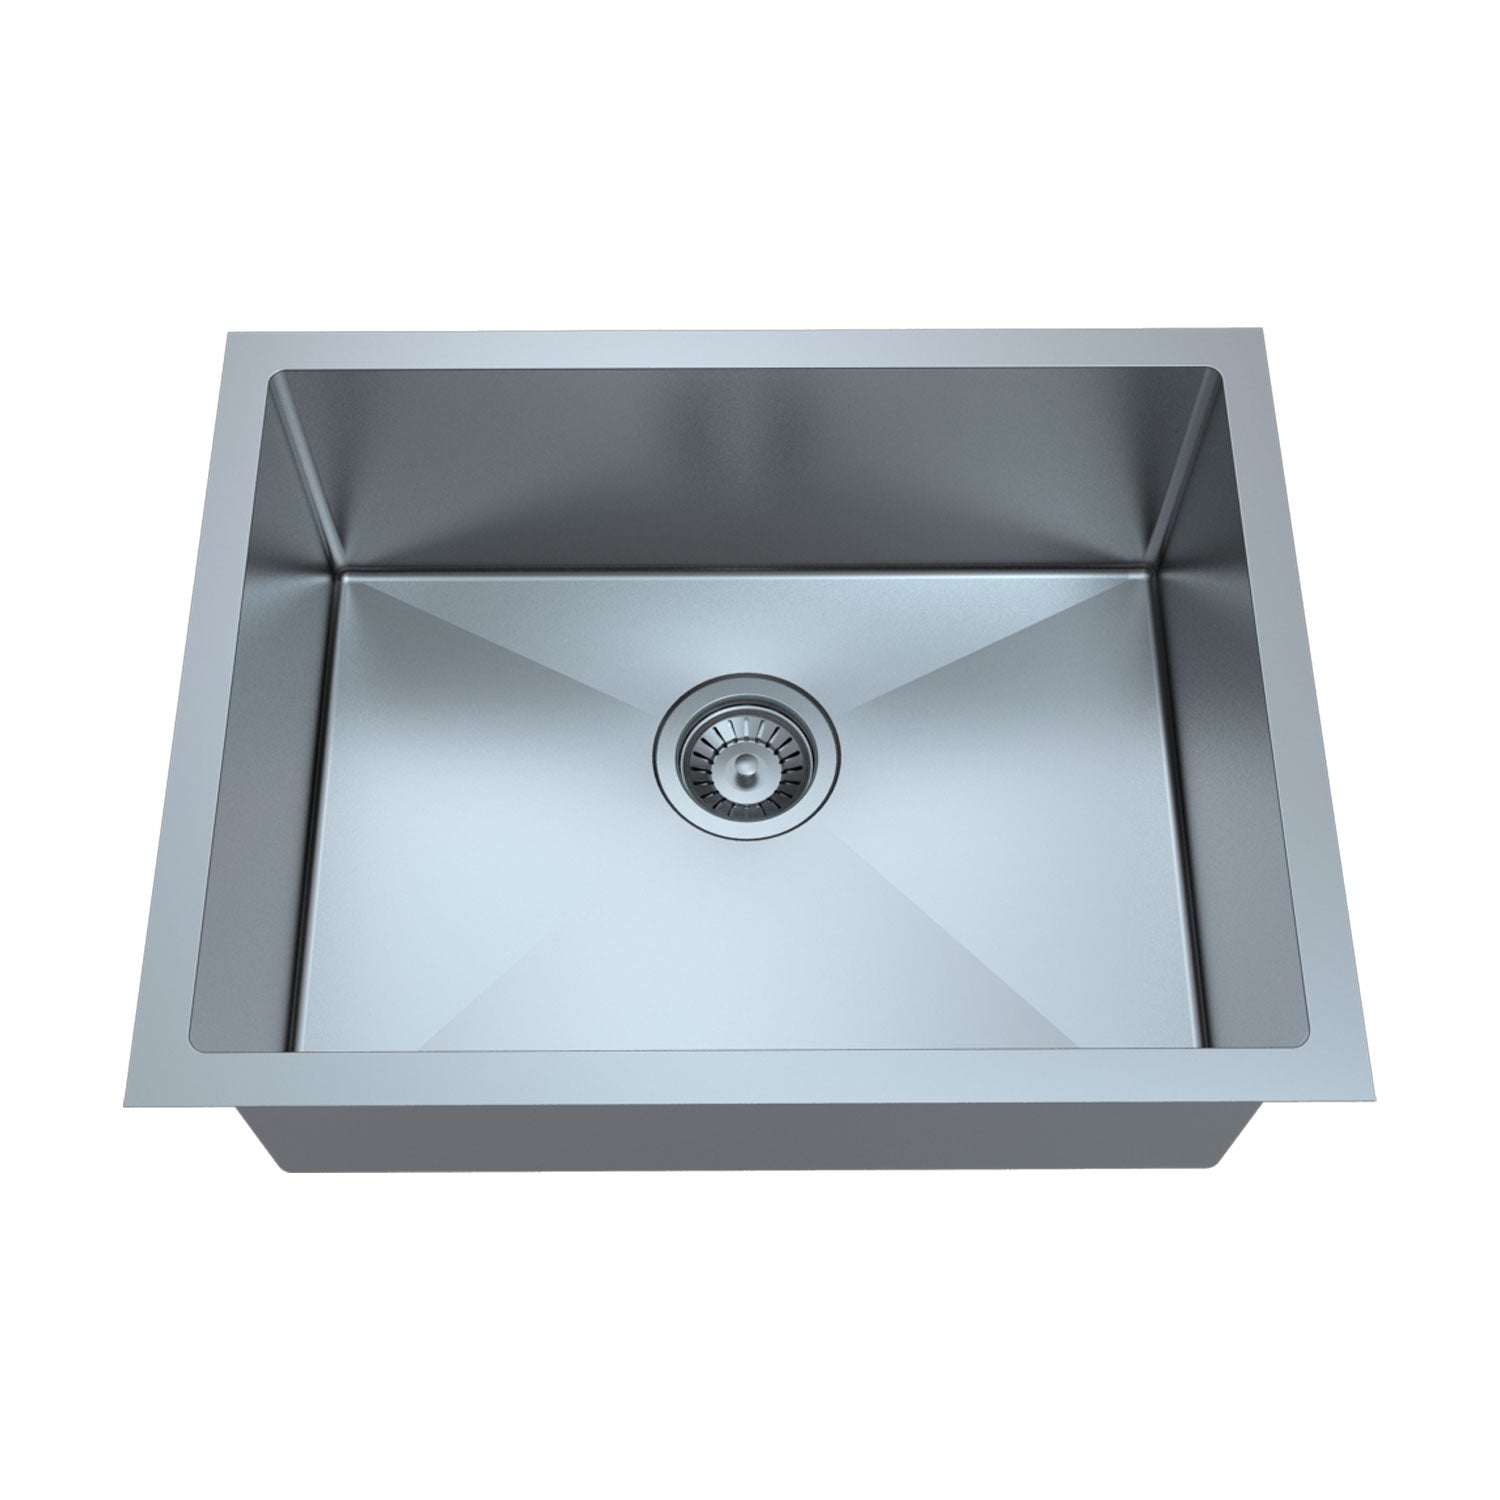 DAX Single Bowl Undermount Kitchen Sink 23" x 18" - R10 - 18G.  No Accessories Included (DX-T2318-R10-X).